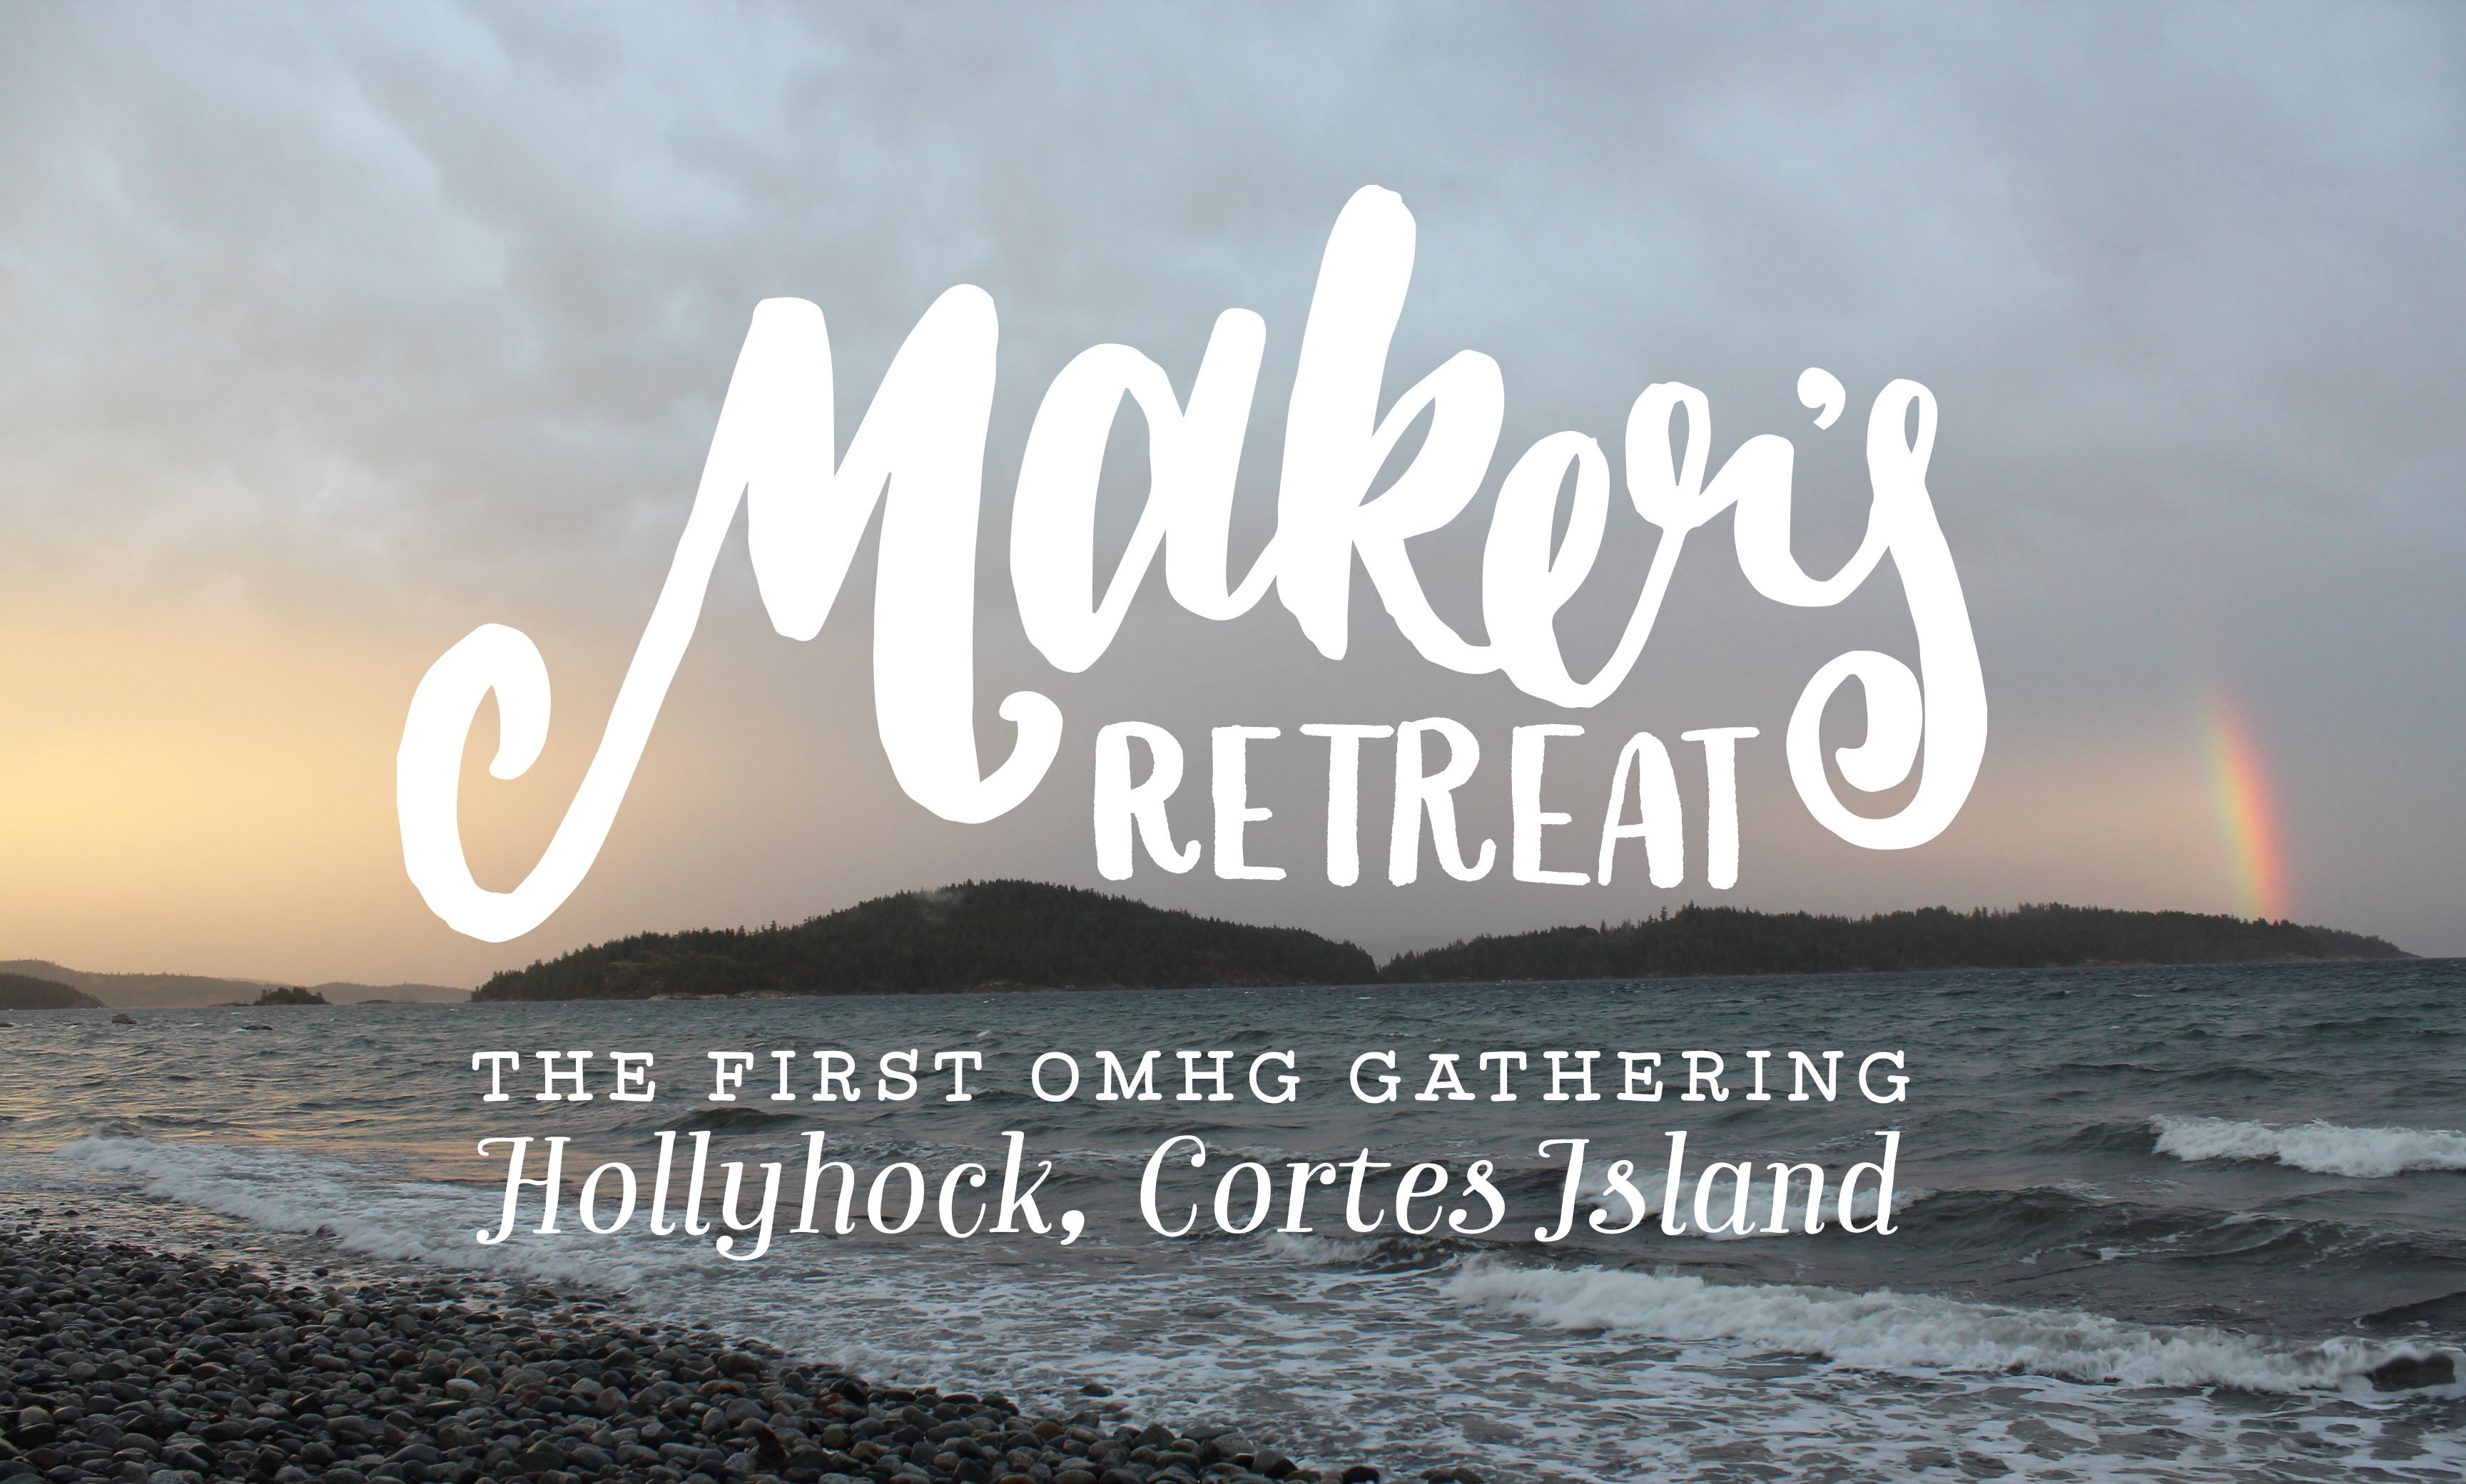 Oh My! Maker's Retreat, Hollyhock, Cortes Island